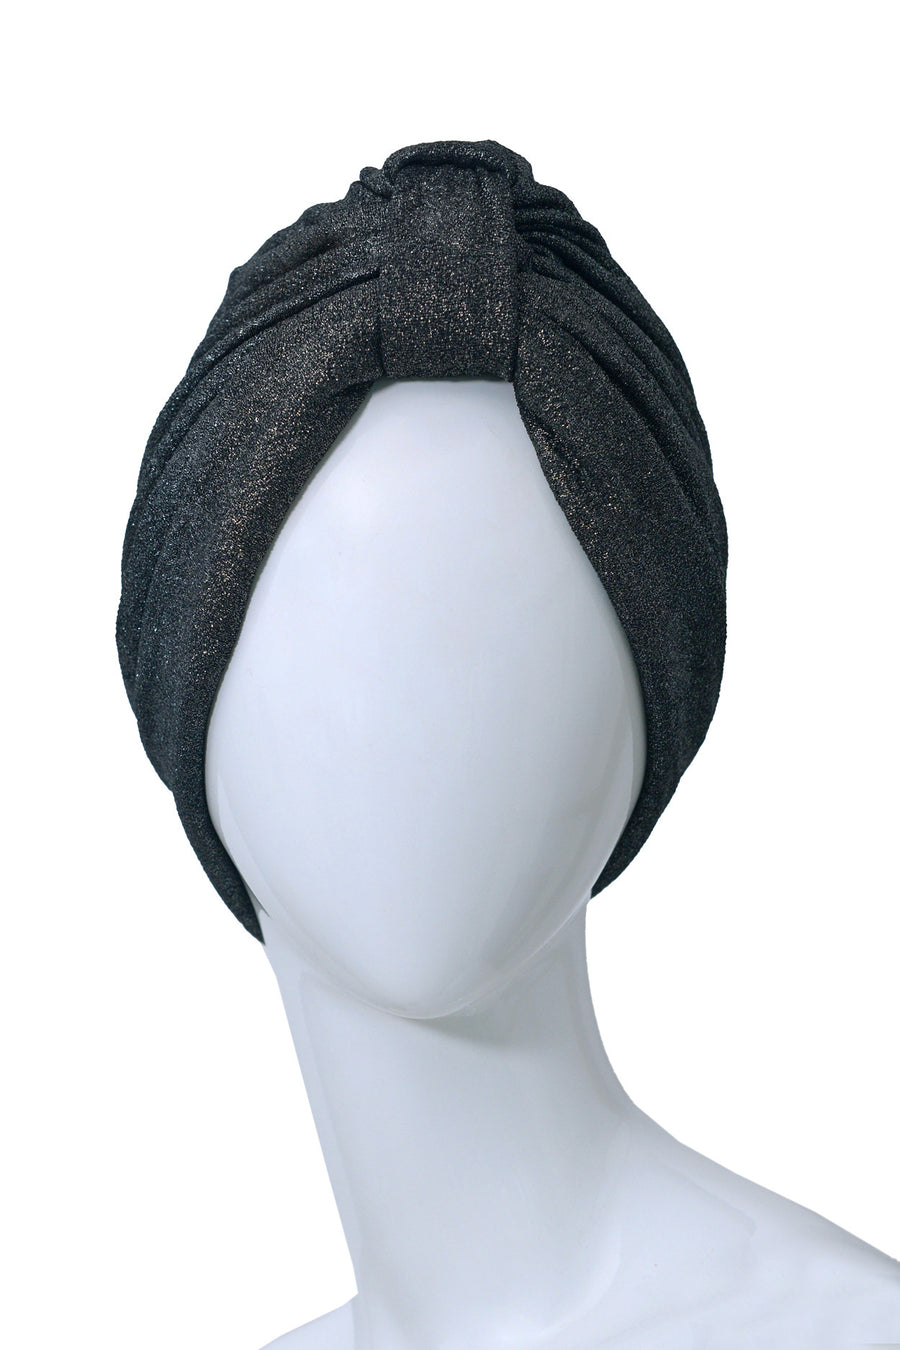 PAILLETTES Dark Glittery Turban for women